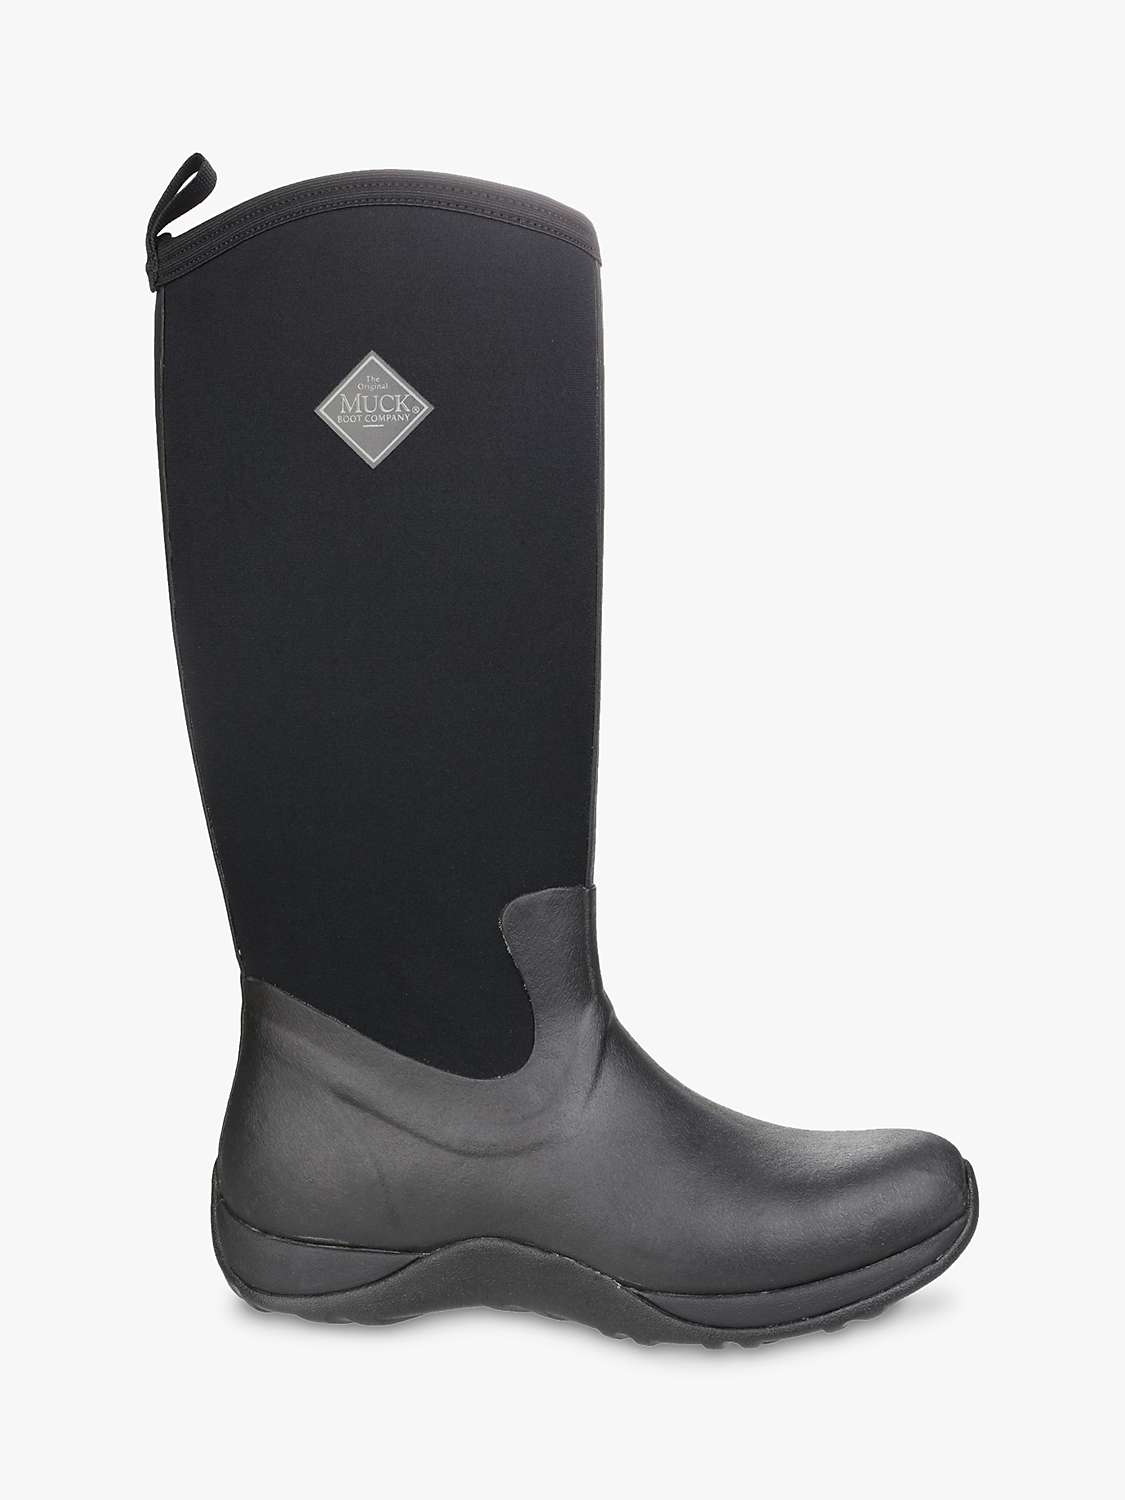 Buy Muck Arctic Adventure Tall Wellington Boots Online at johnlewis.com